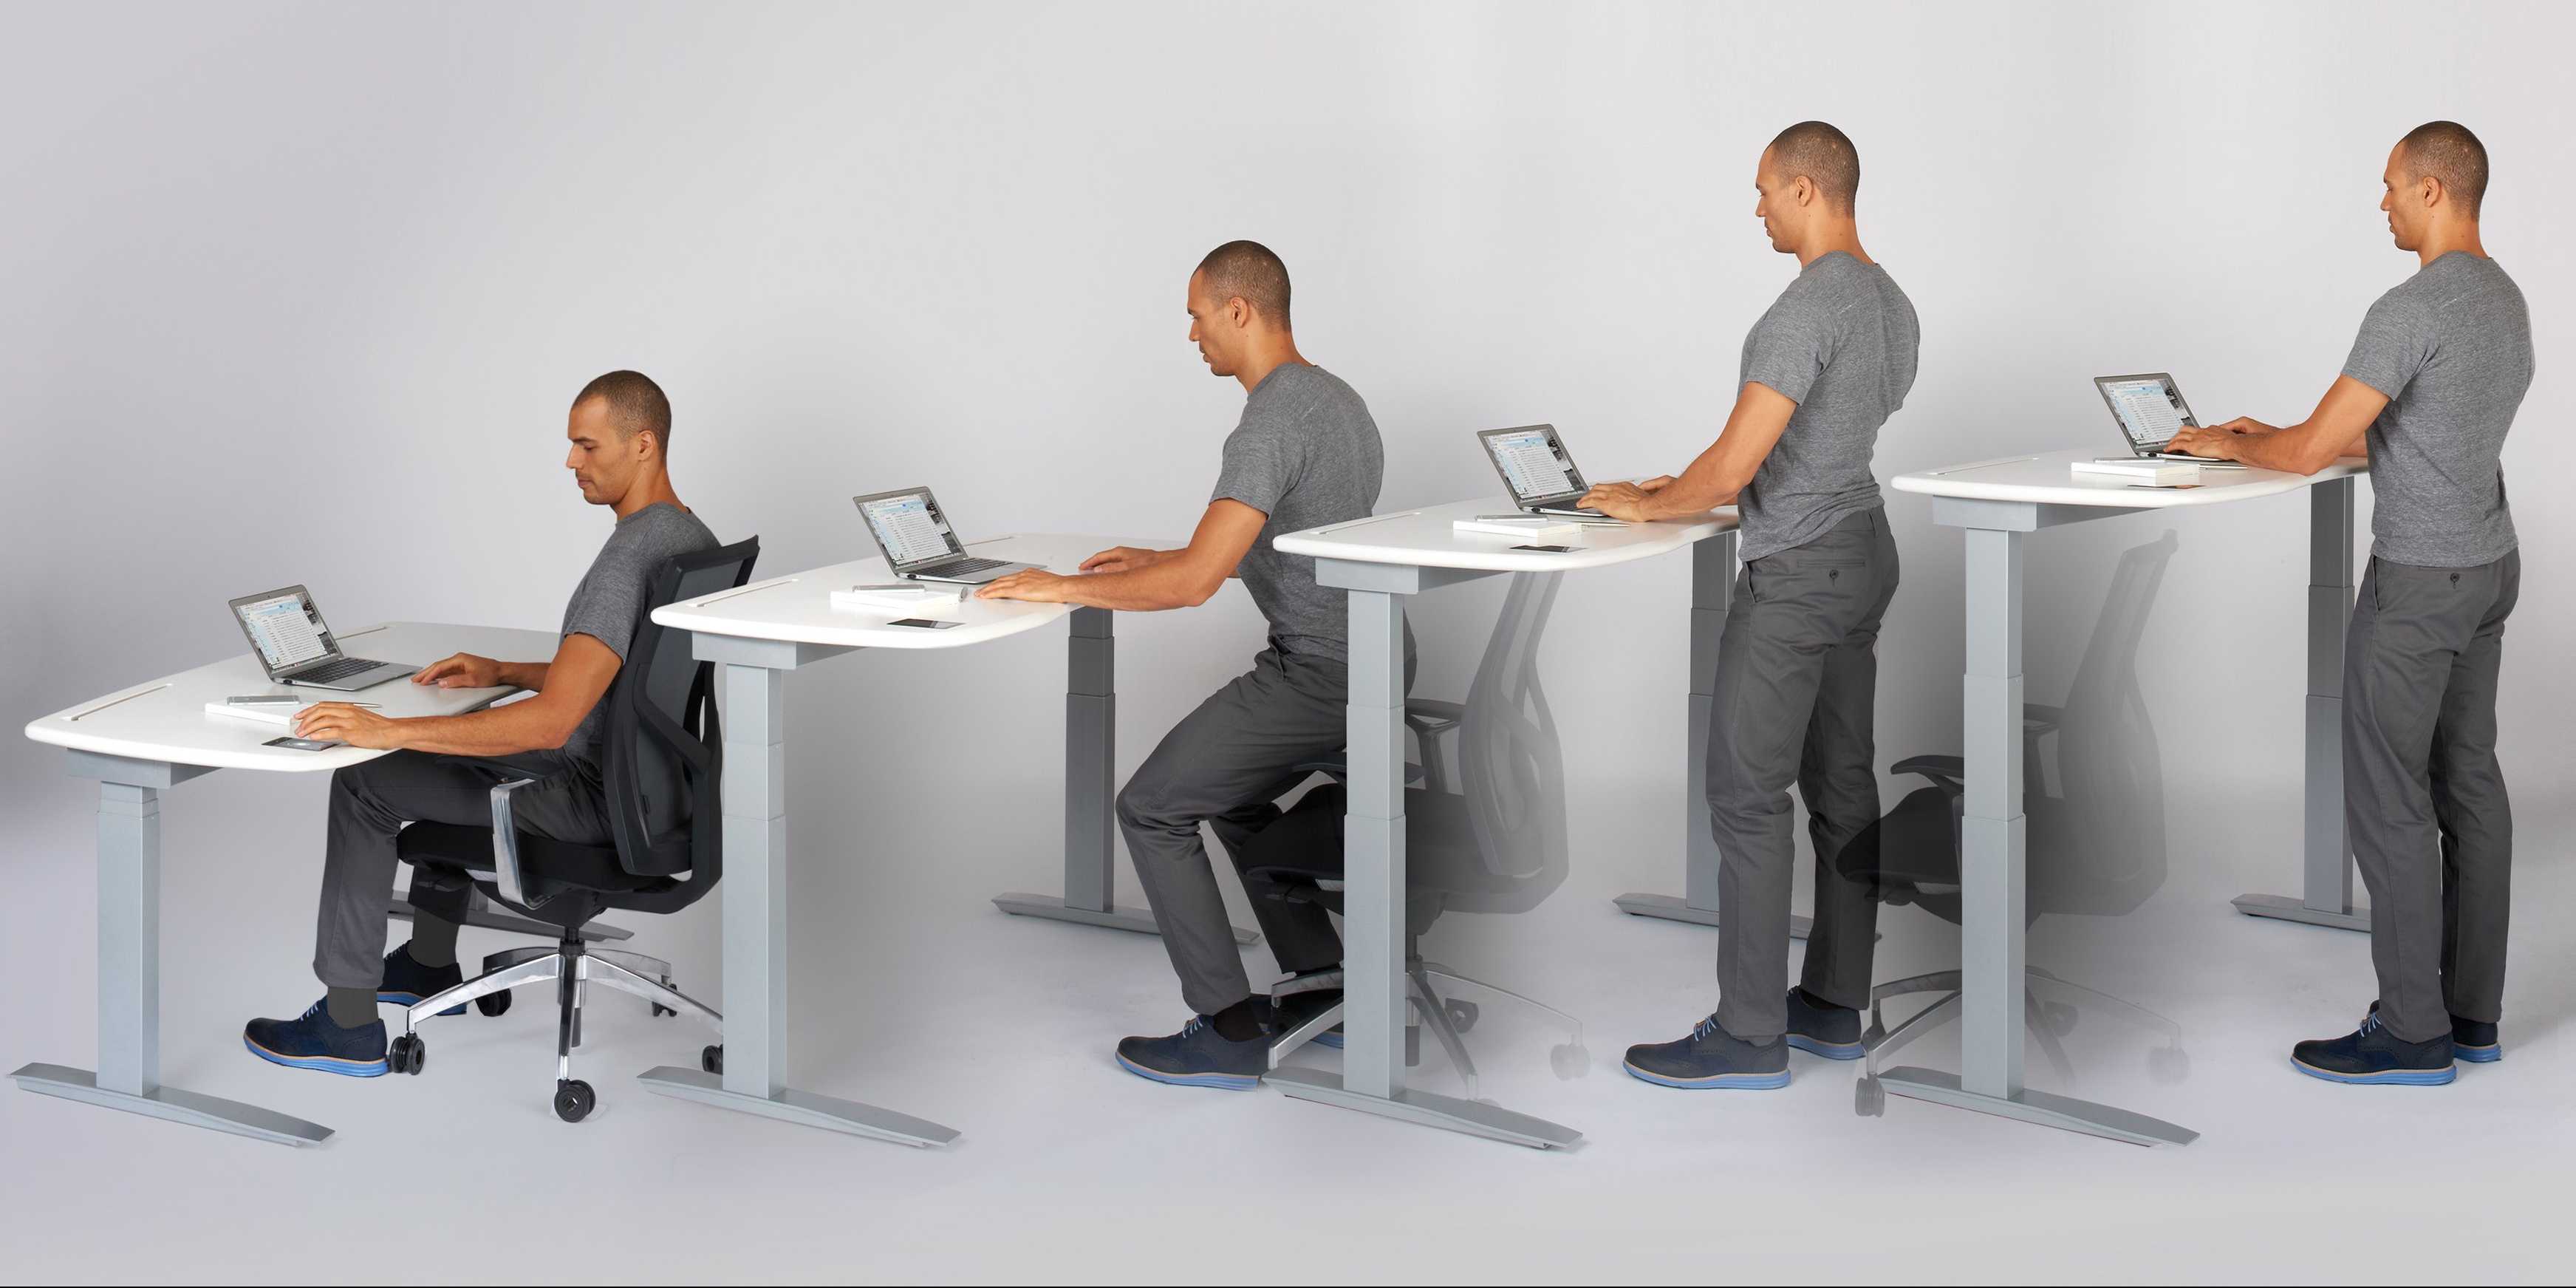 Standing desk usage